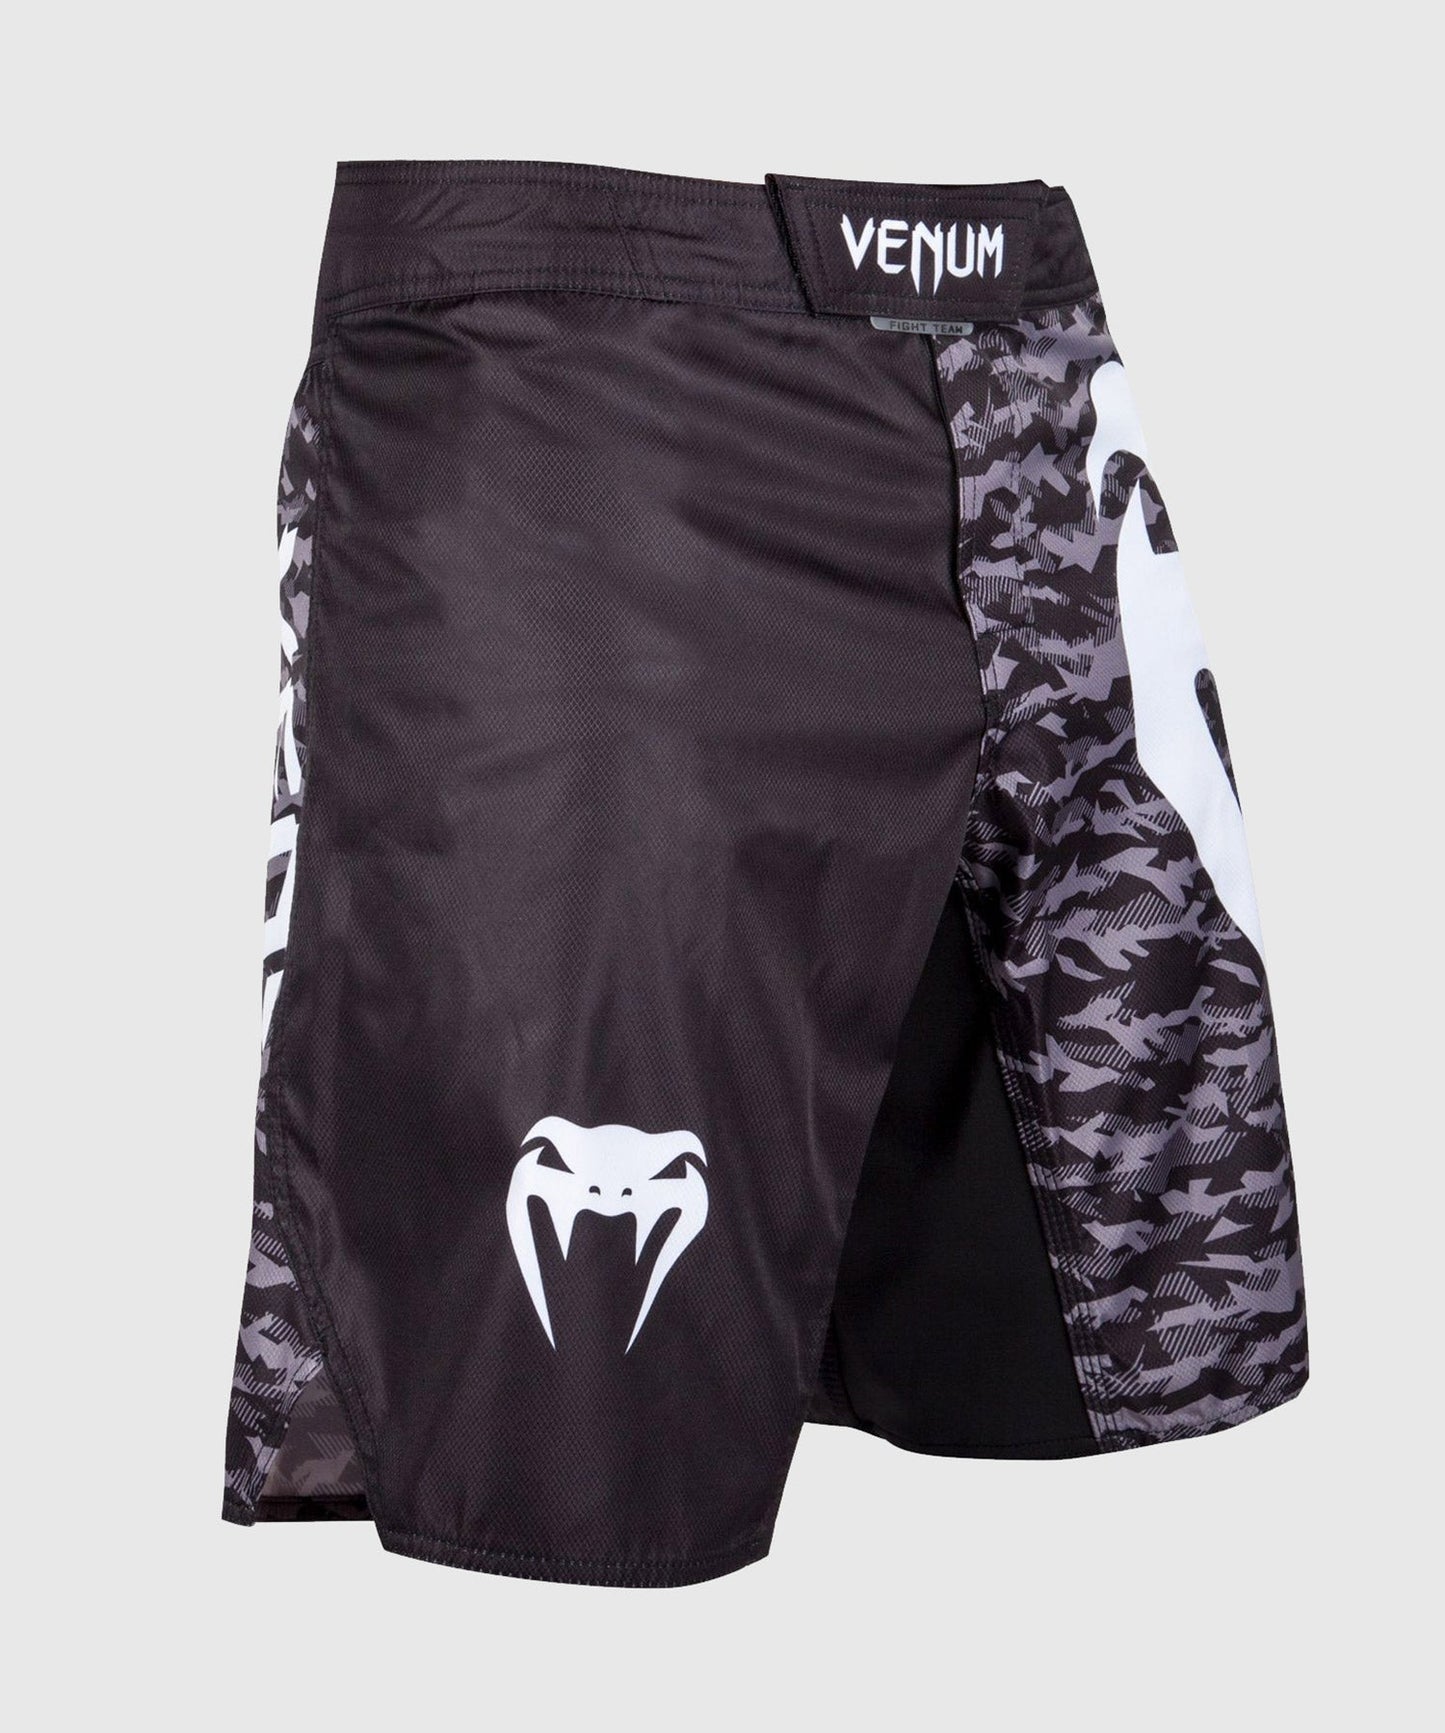 Venum Light 3.0 Fightshorts - Black/Urban Camo